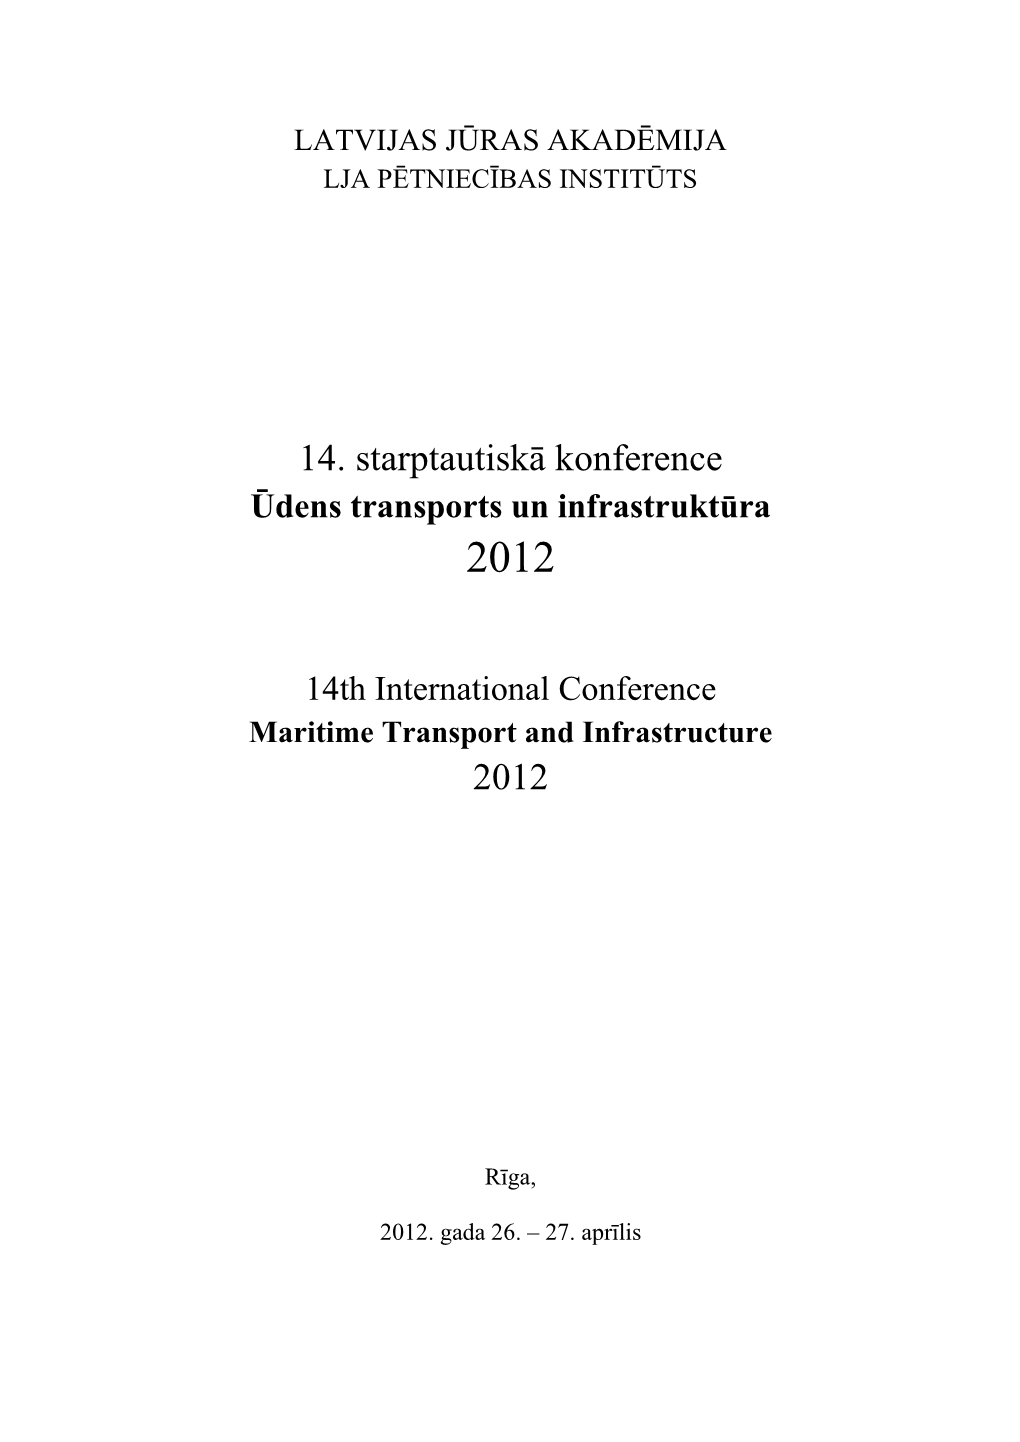 14. Starptautiskā Konference 2012